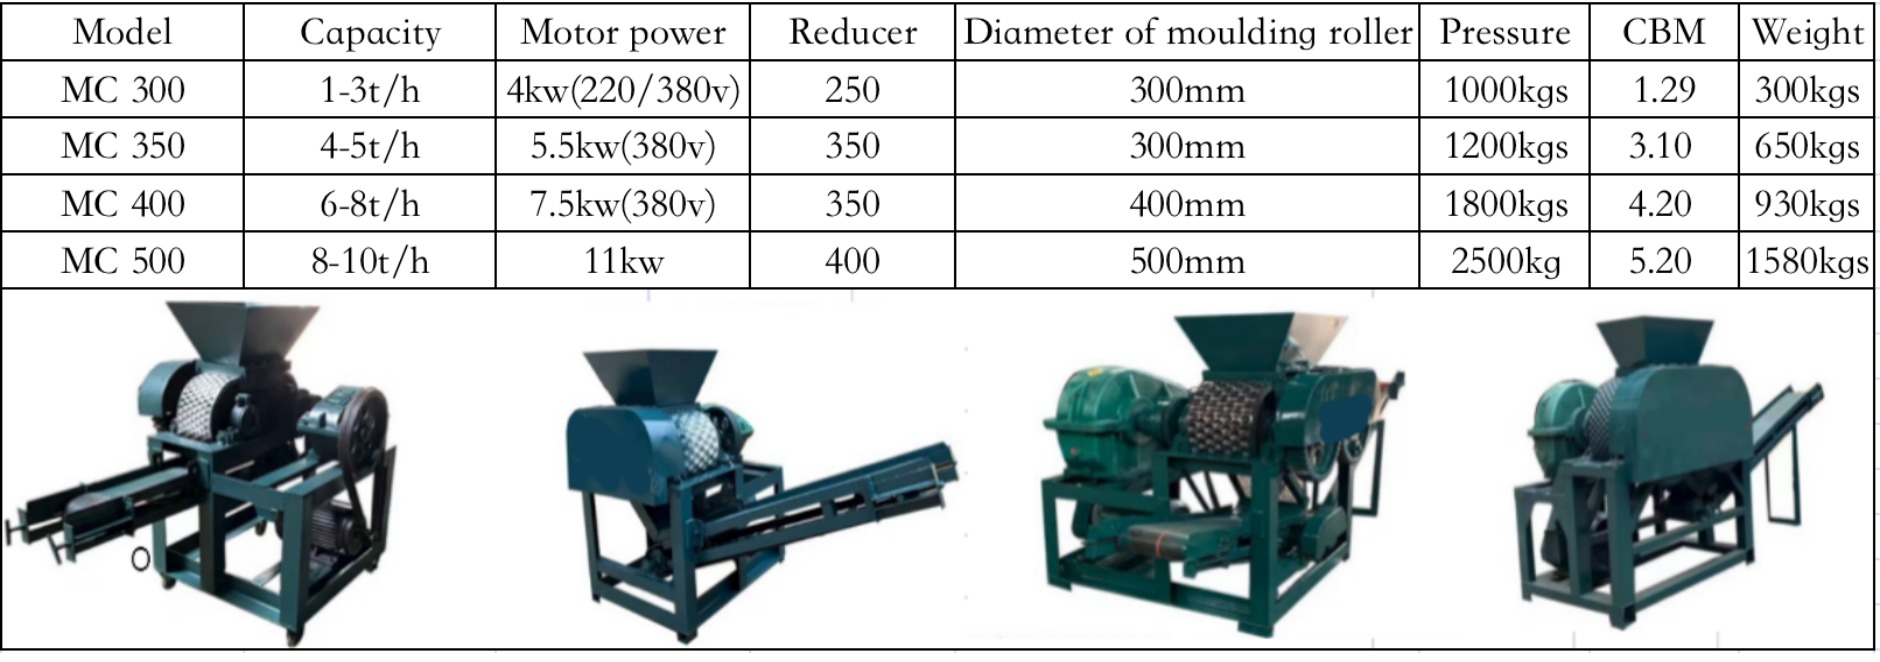 parameter of charcoal briquette pressing machine.jpeg